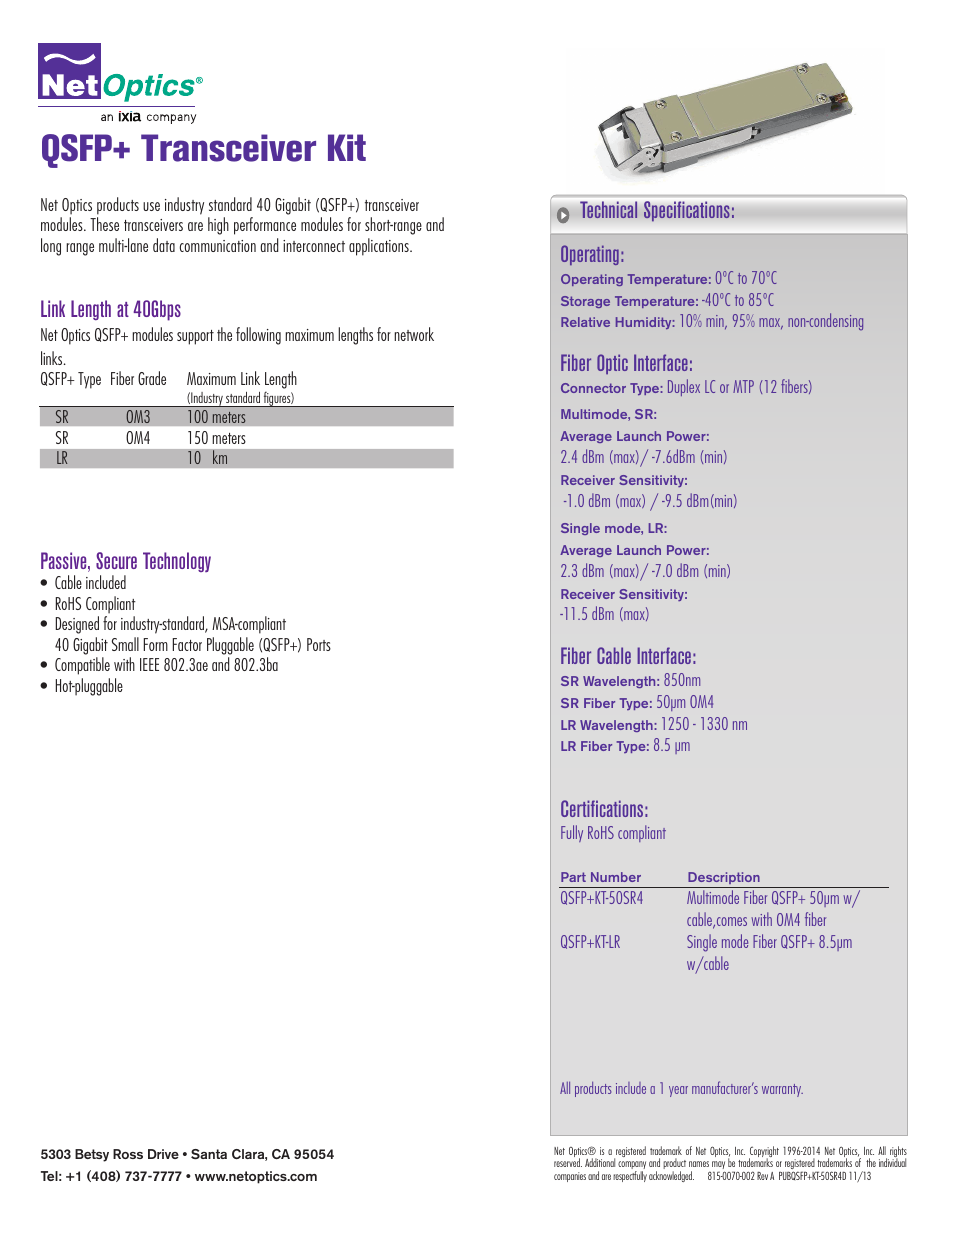 Net Optics QSFP+ Transceiver Kit User Manual | 1 page